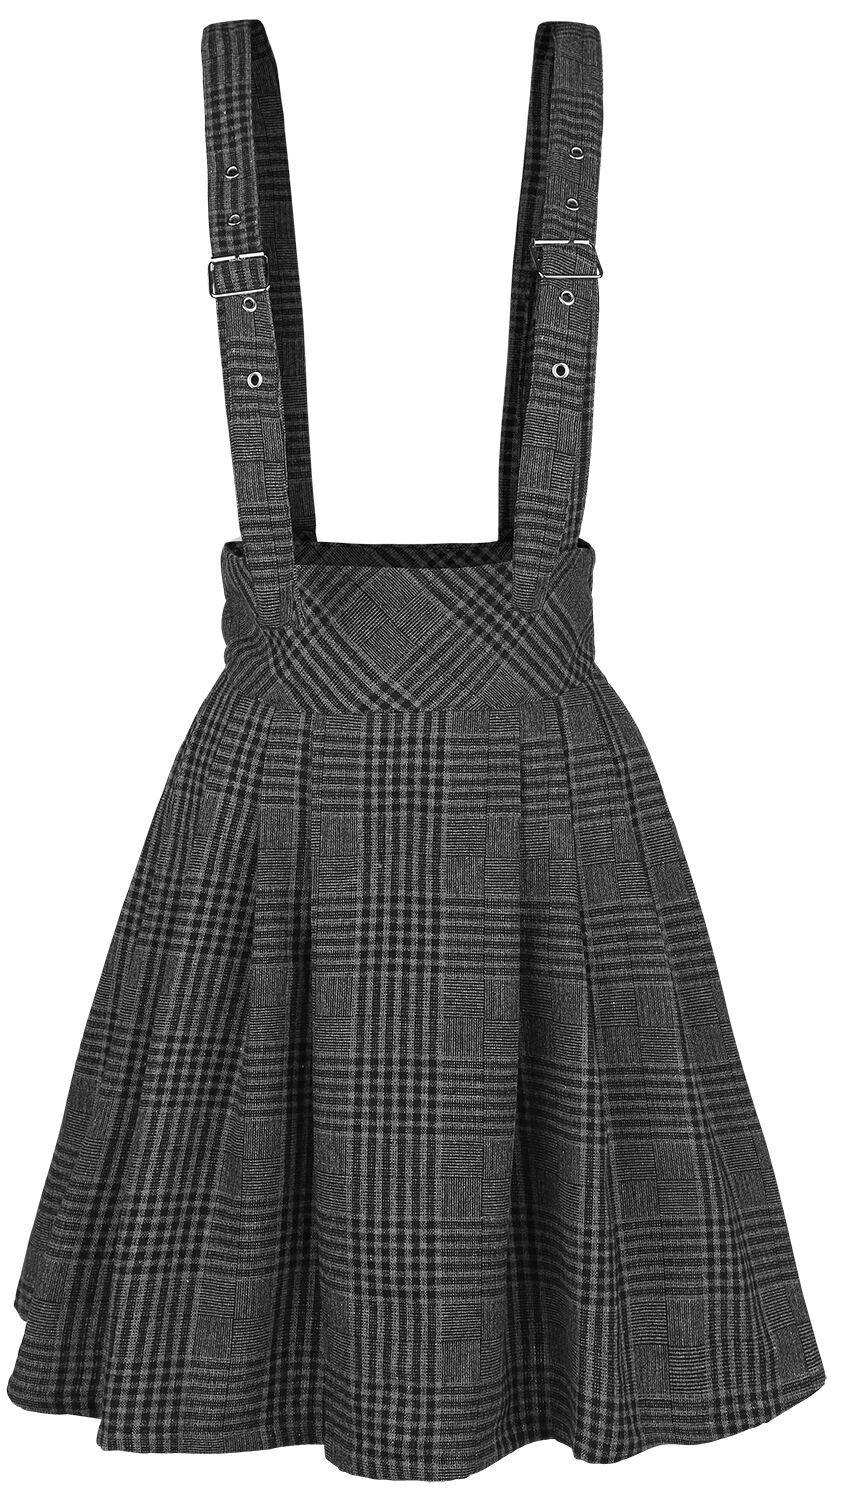 Jawbreaker - Rockabilly Kurzer Rock - Grey Days High Waisted Skirt - S bis XL - für Damen - Größe M - grau